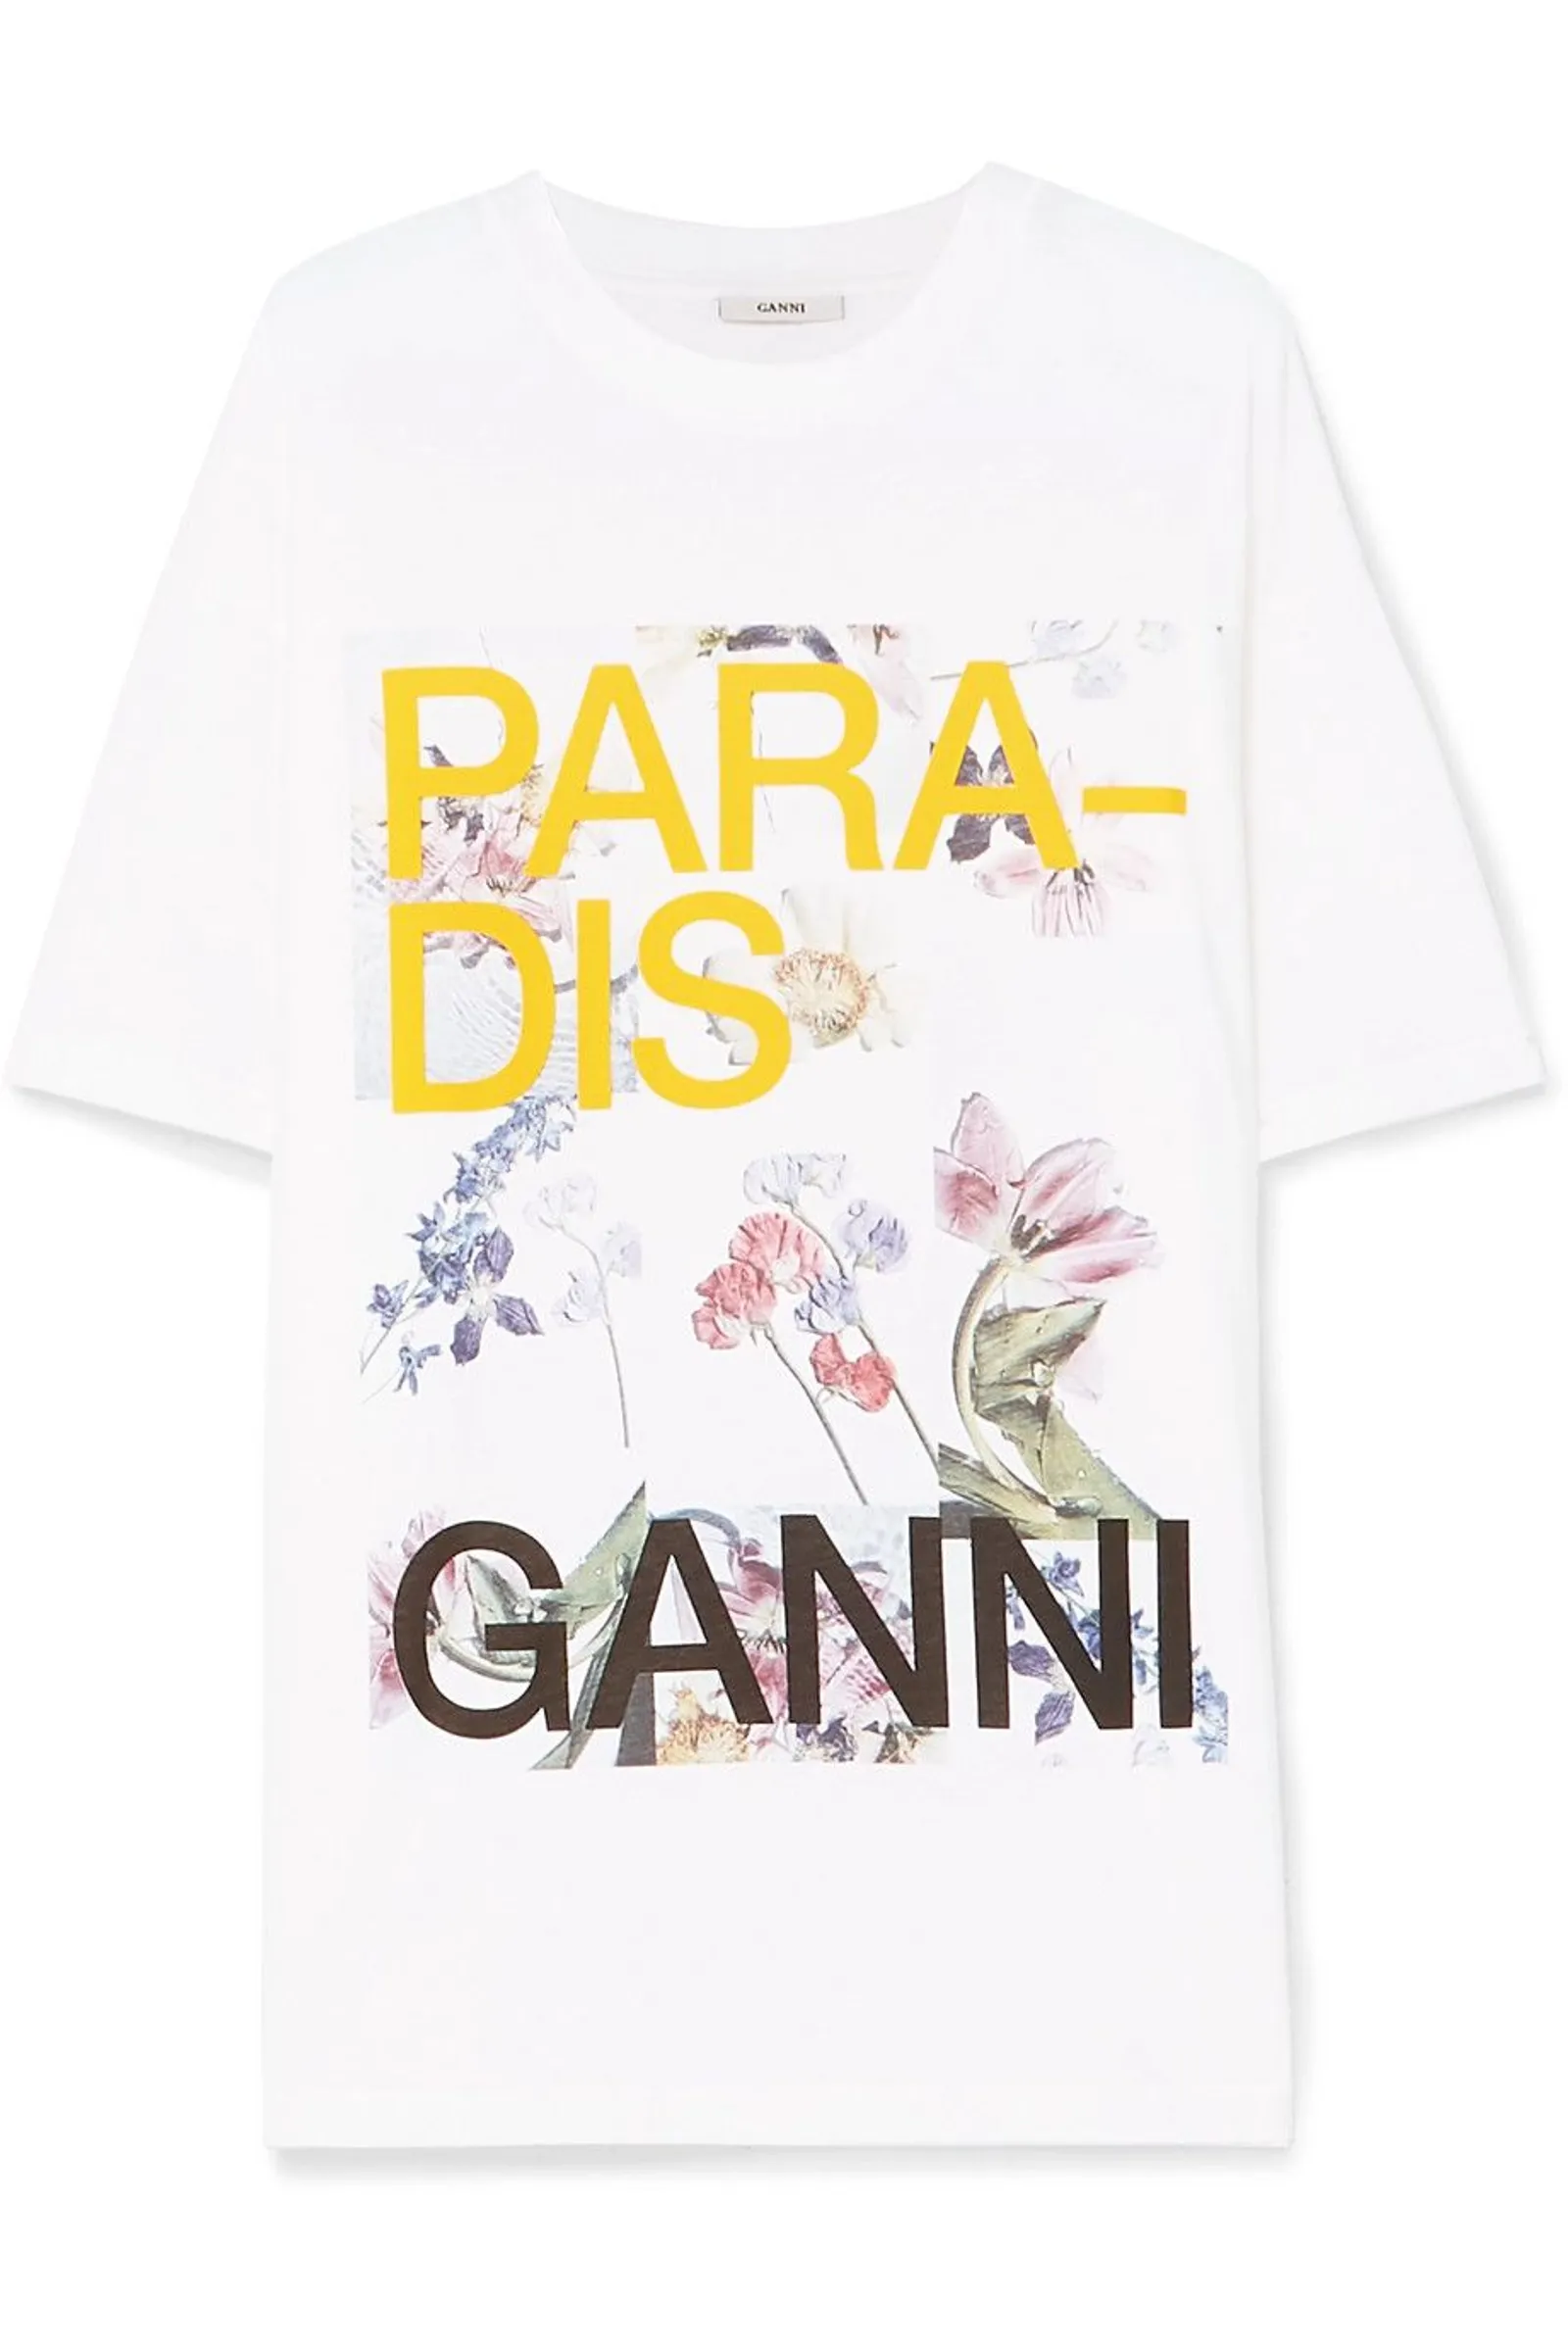 #PopbelaOOTD: T-shirt Desainer untuk Gaya Kasual